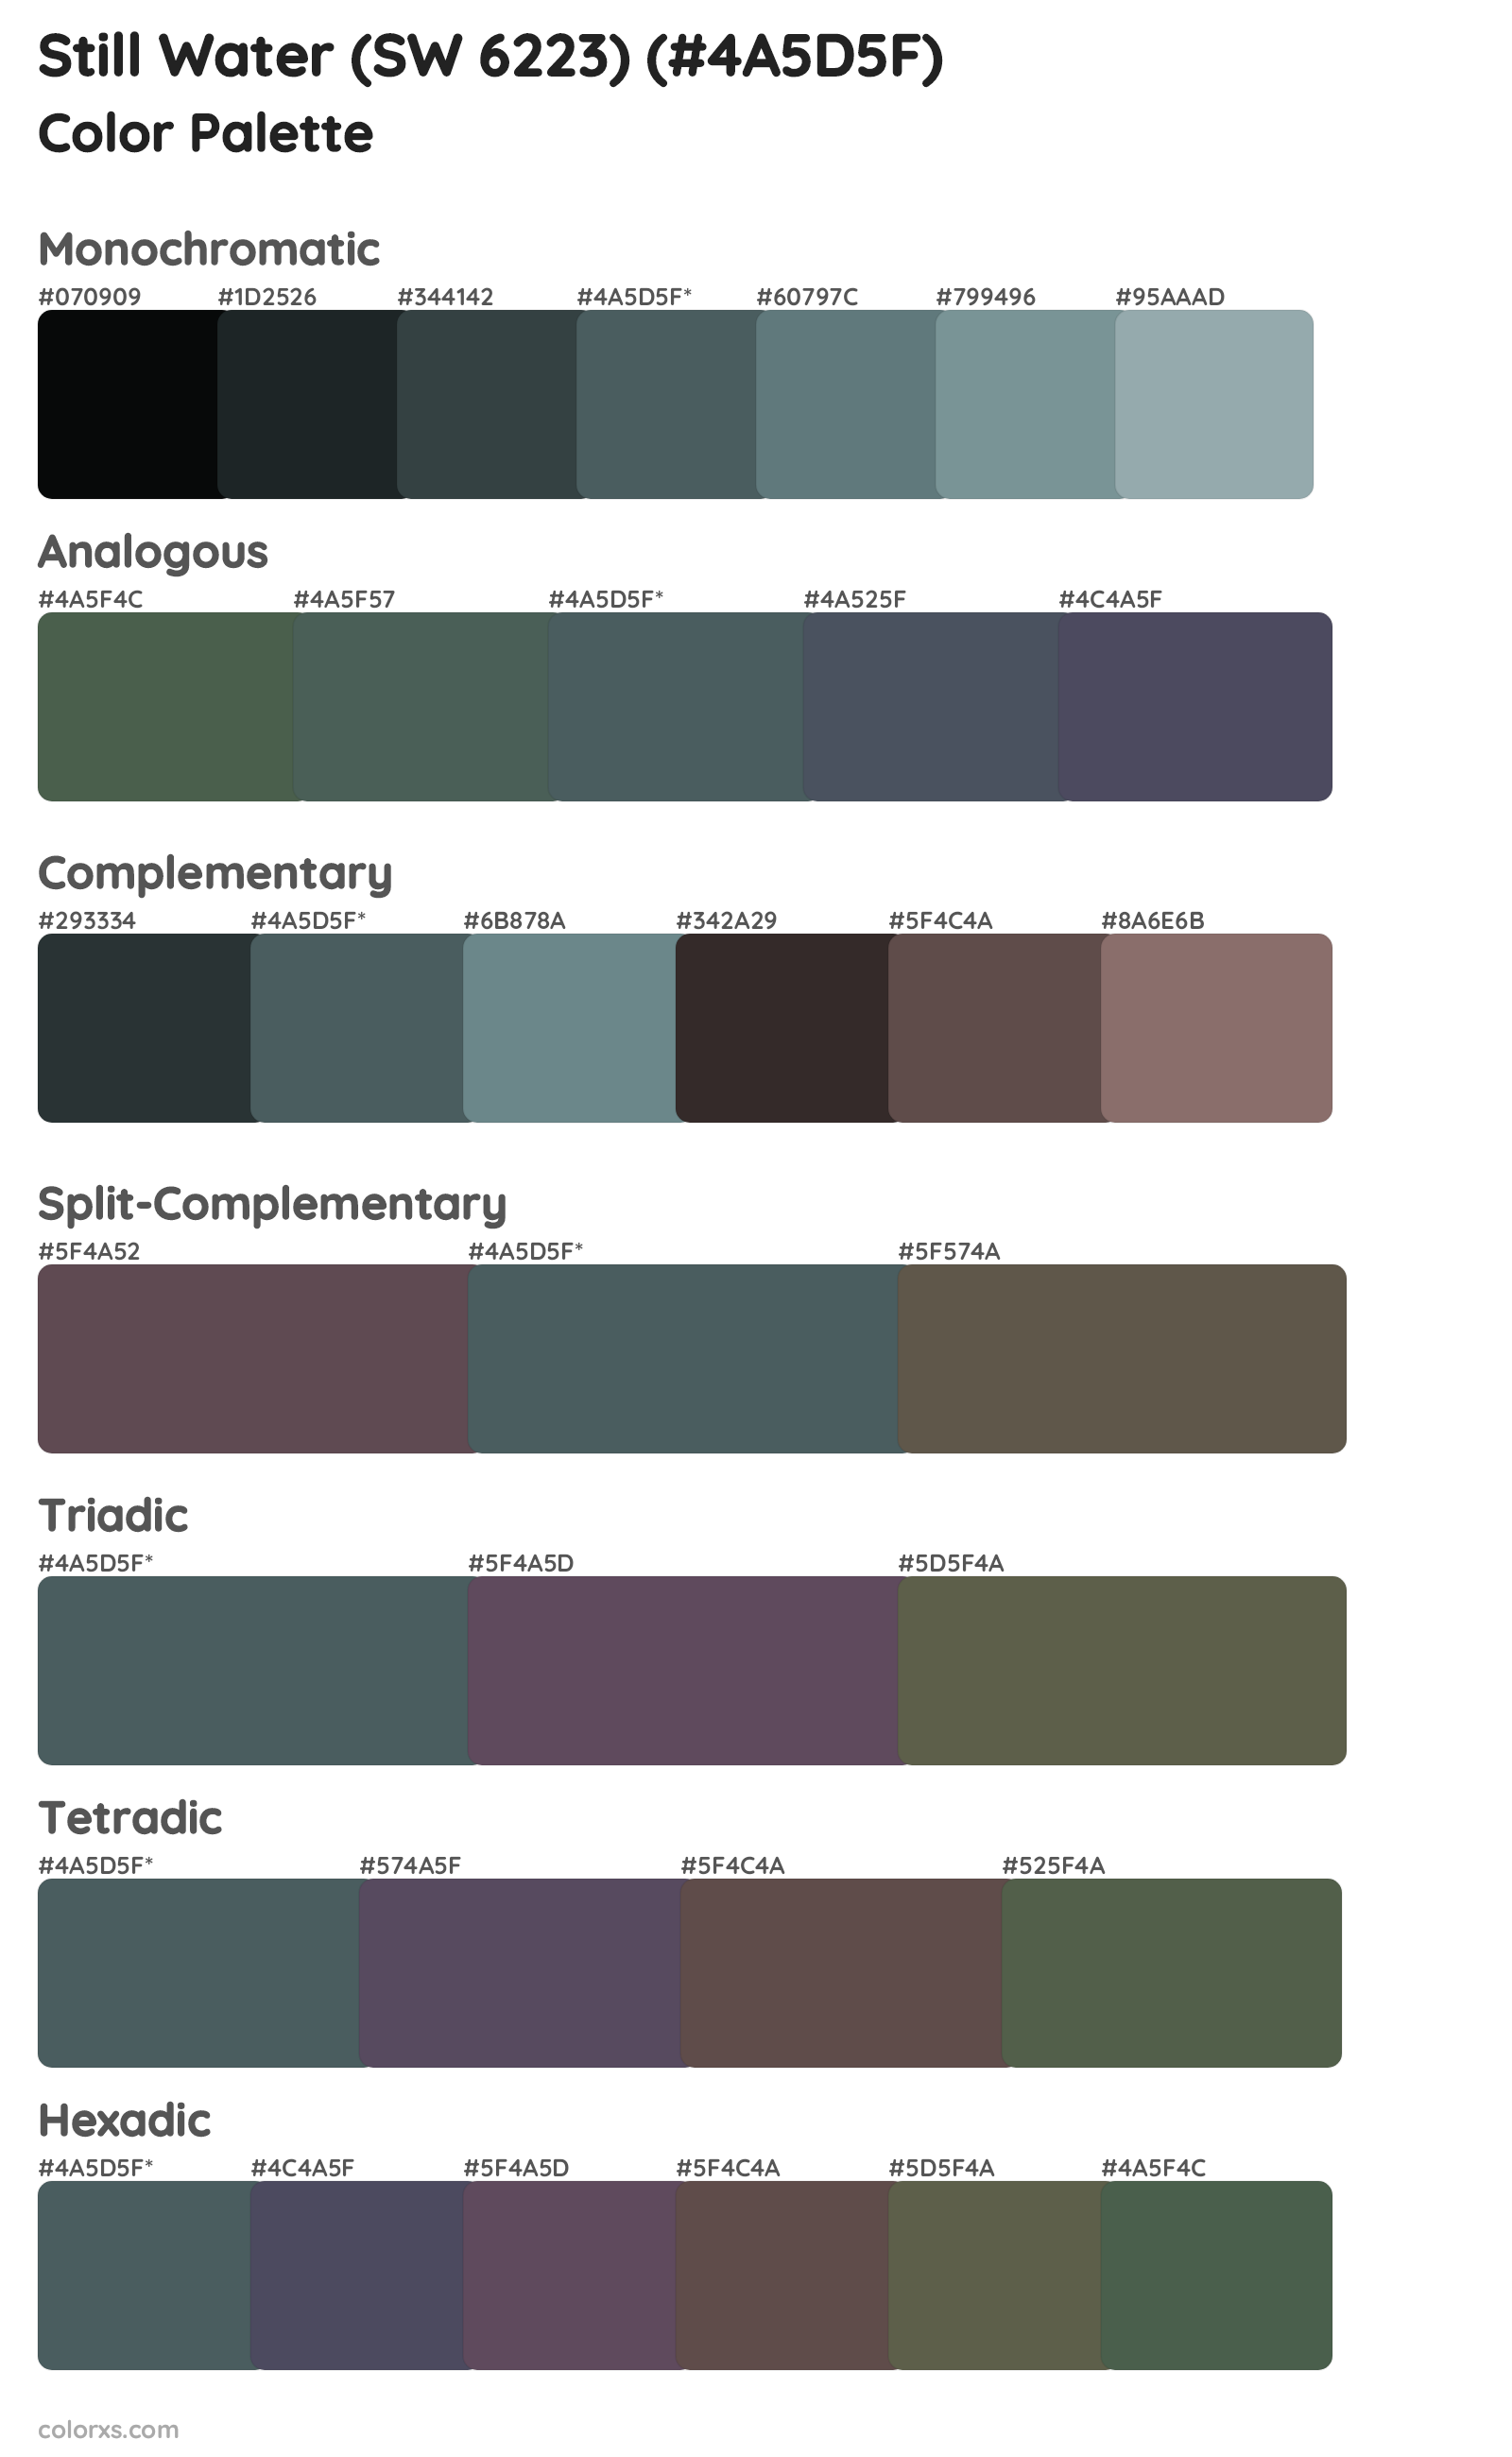 Still Water (SW 6223) Color Scheme Palettes